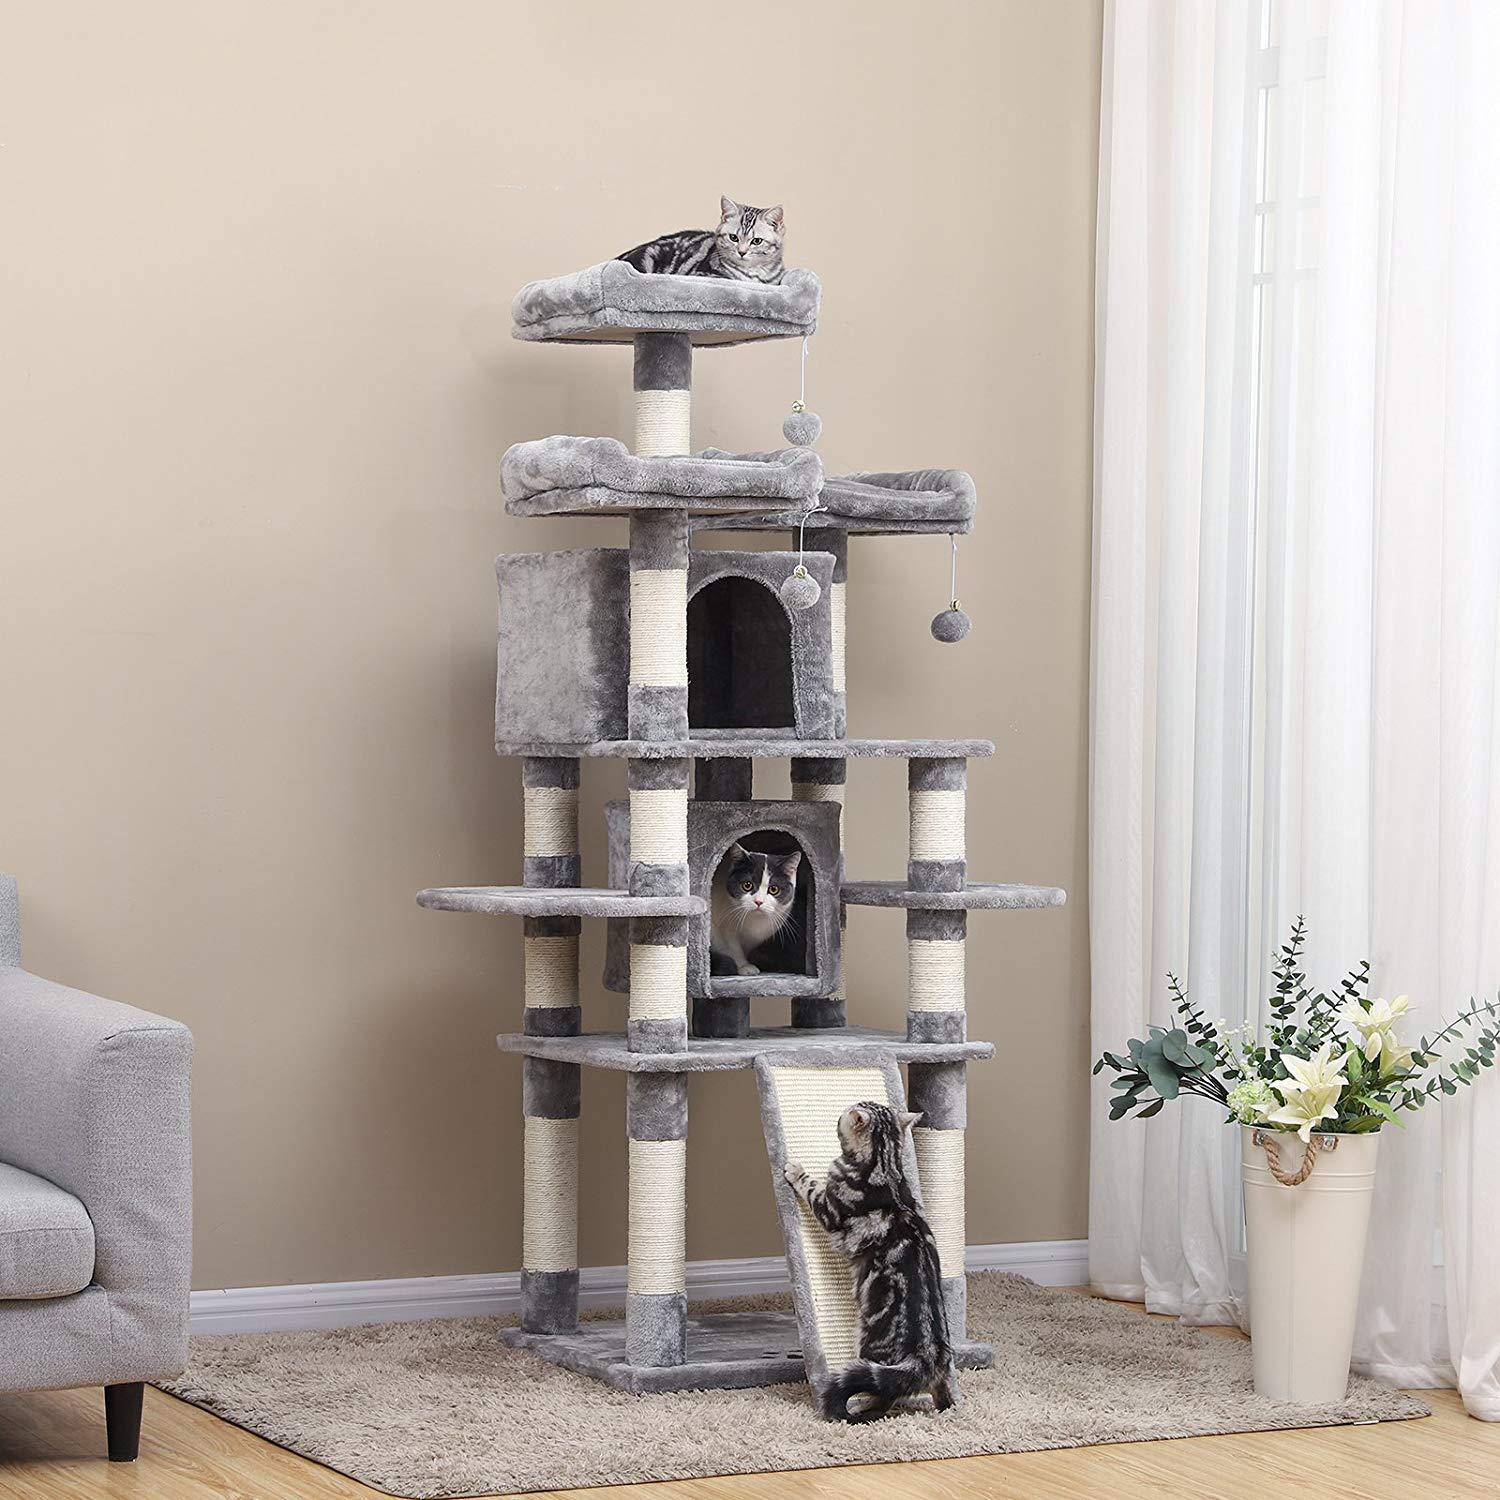 Wooden Scratch Climbing Tower Diy Cat Tree Tower Condo Play House Pet Scratch